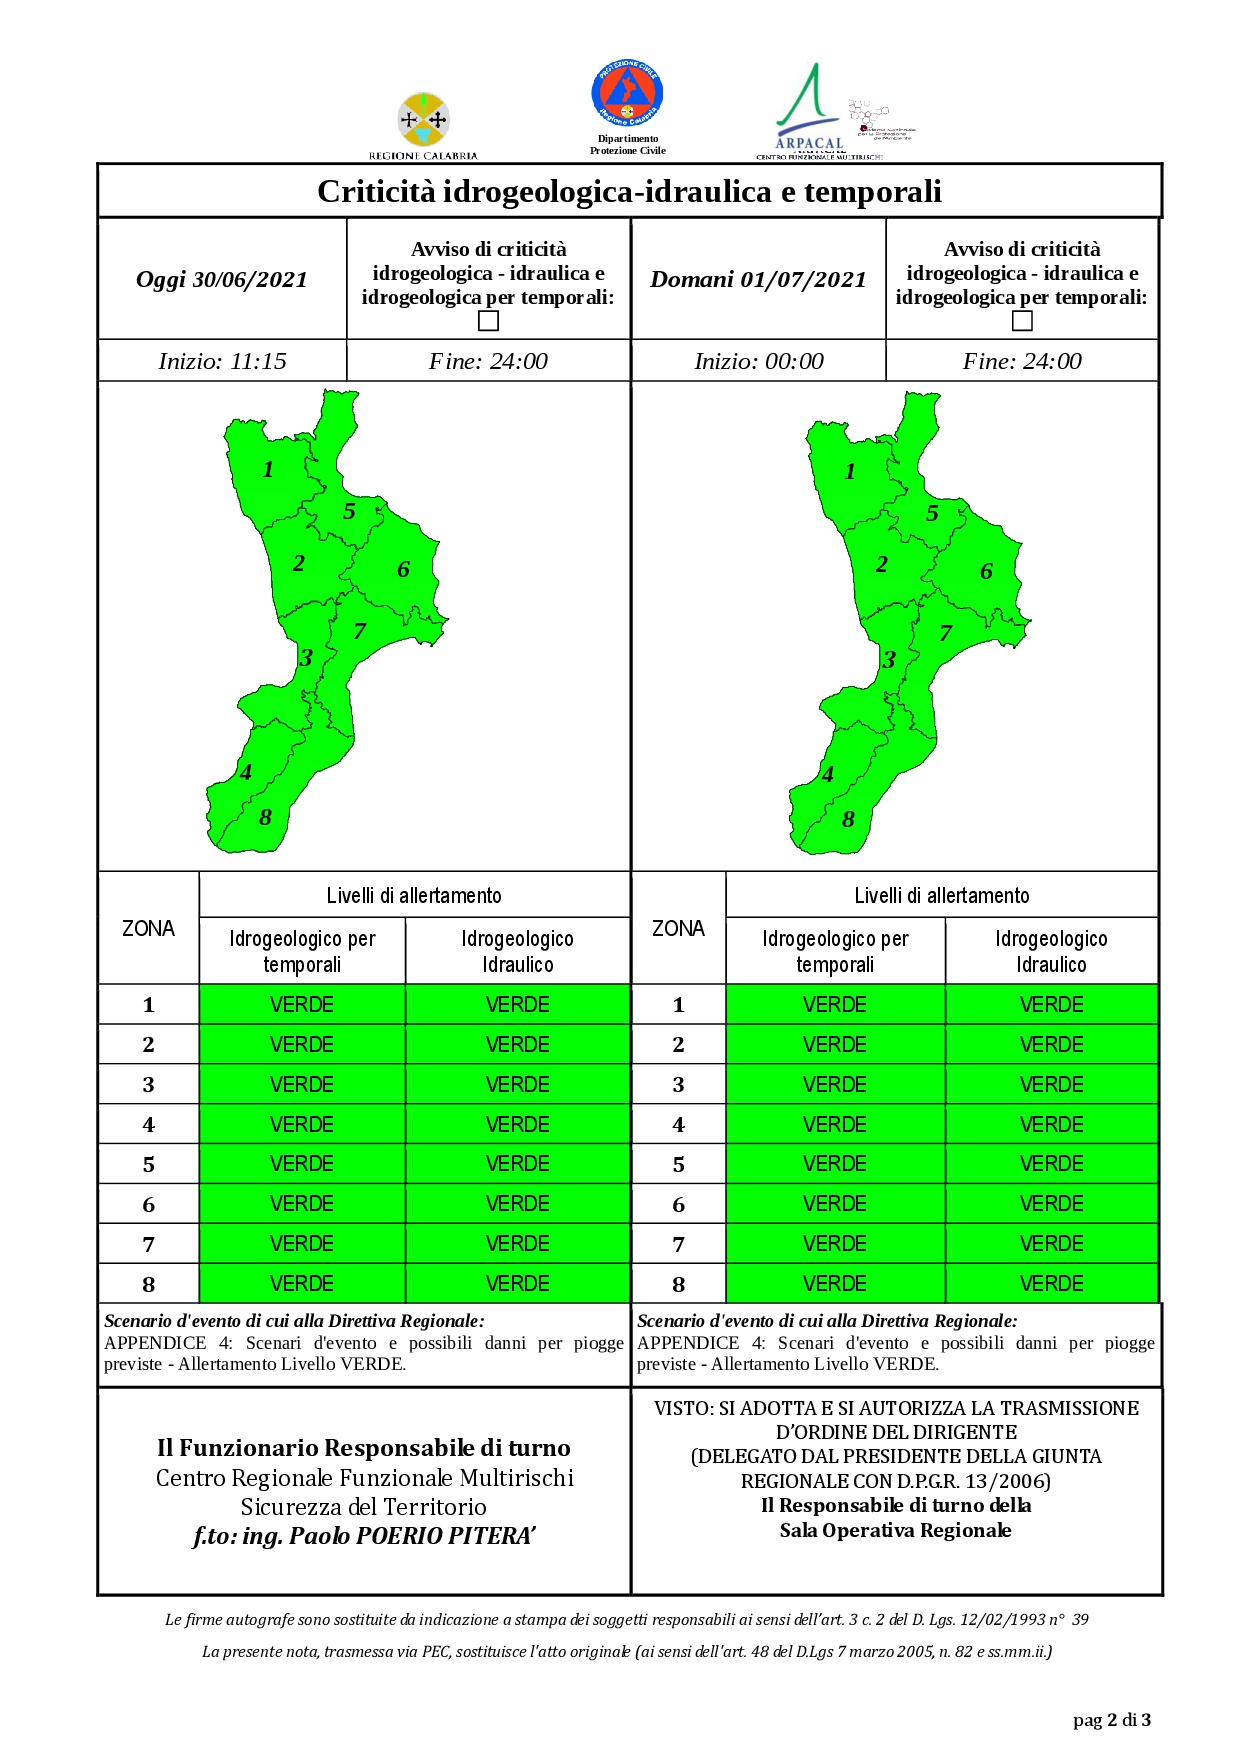 Criticità idrogeologica-idraulica e temporali in Calabria 30-06-2021